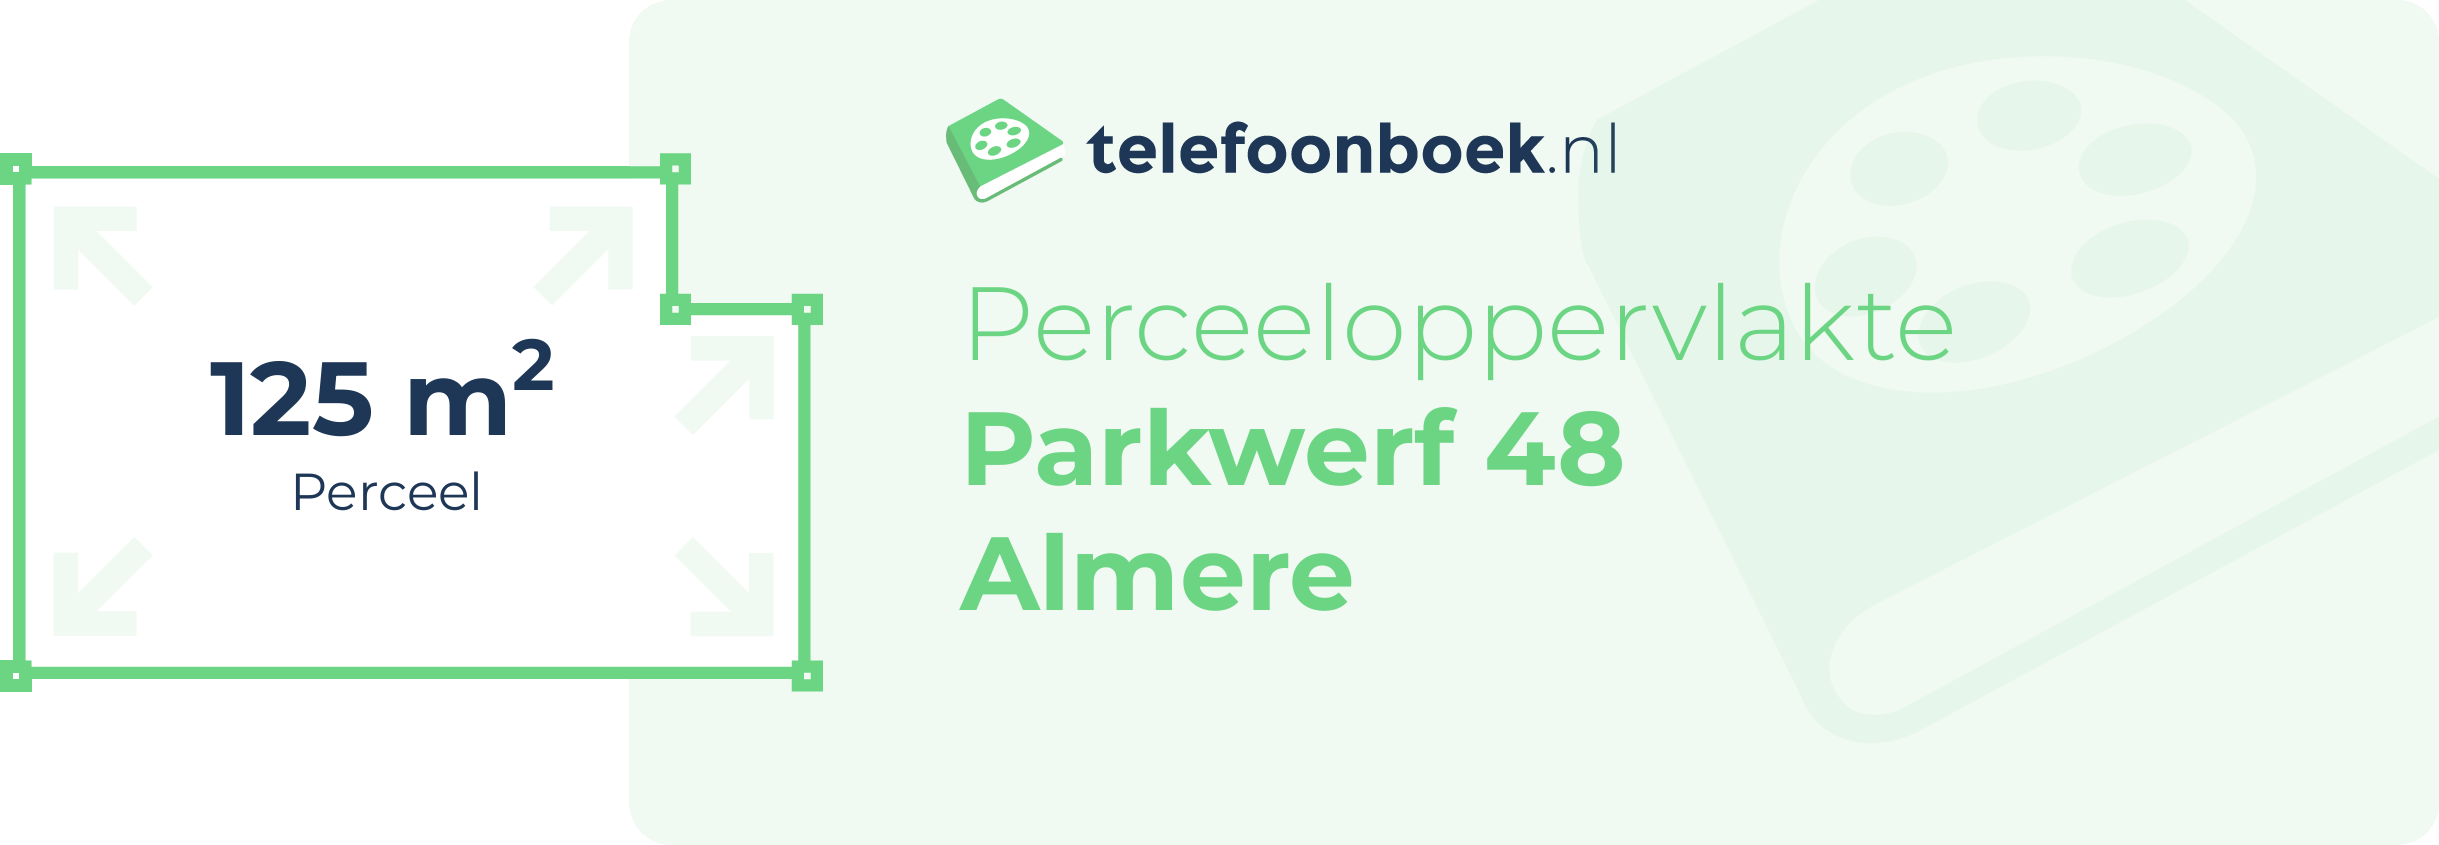 Perceeloppervlakte Parkwerf 48 Almere